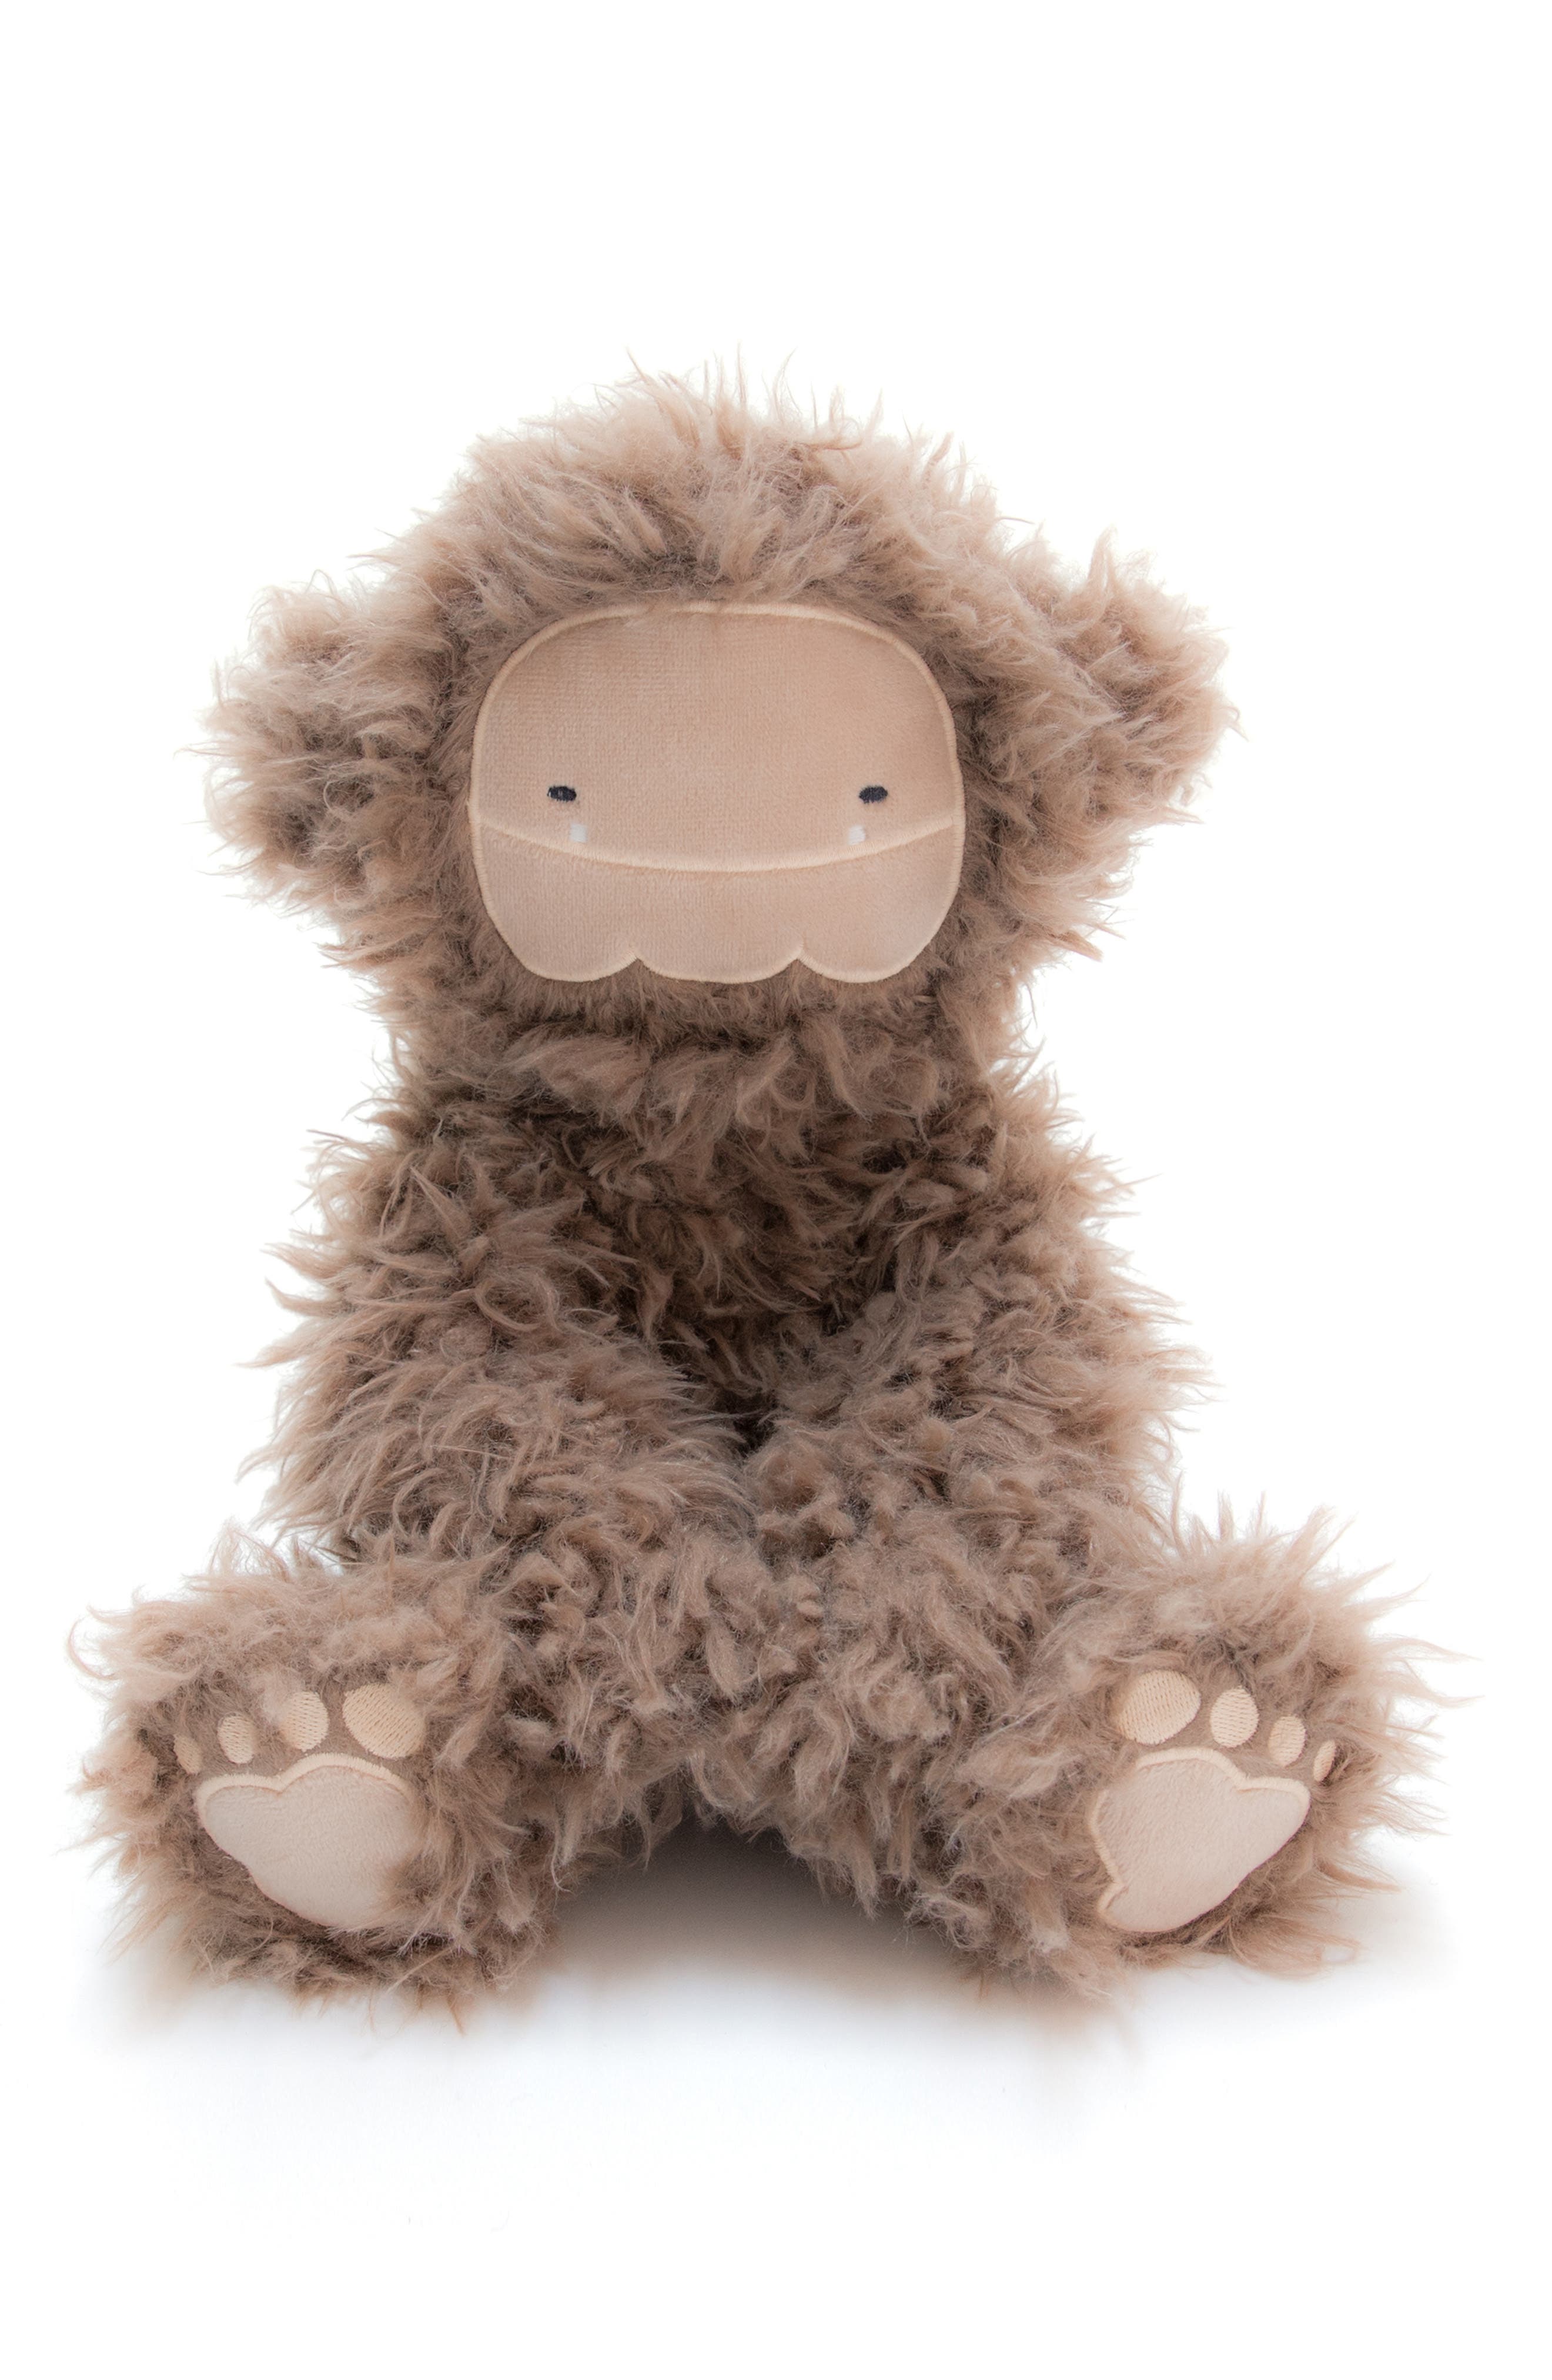 bigfoot stuffed animal for sale